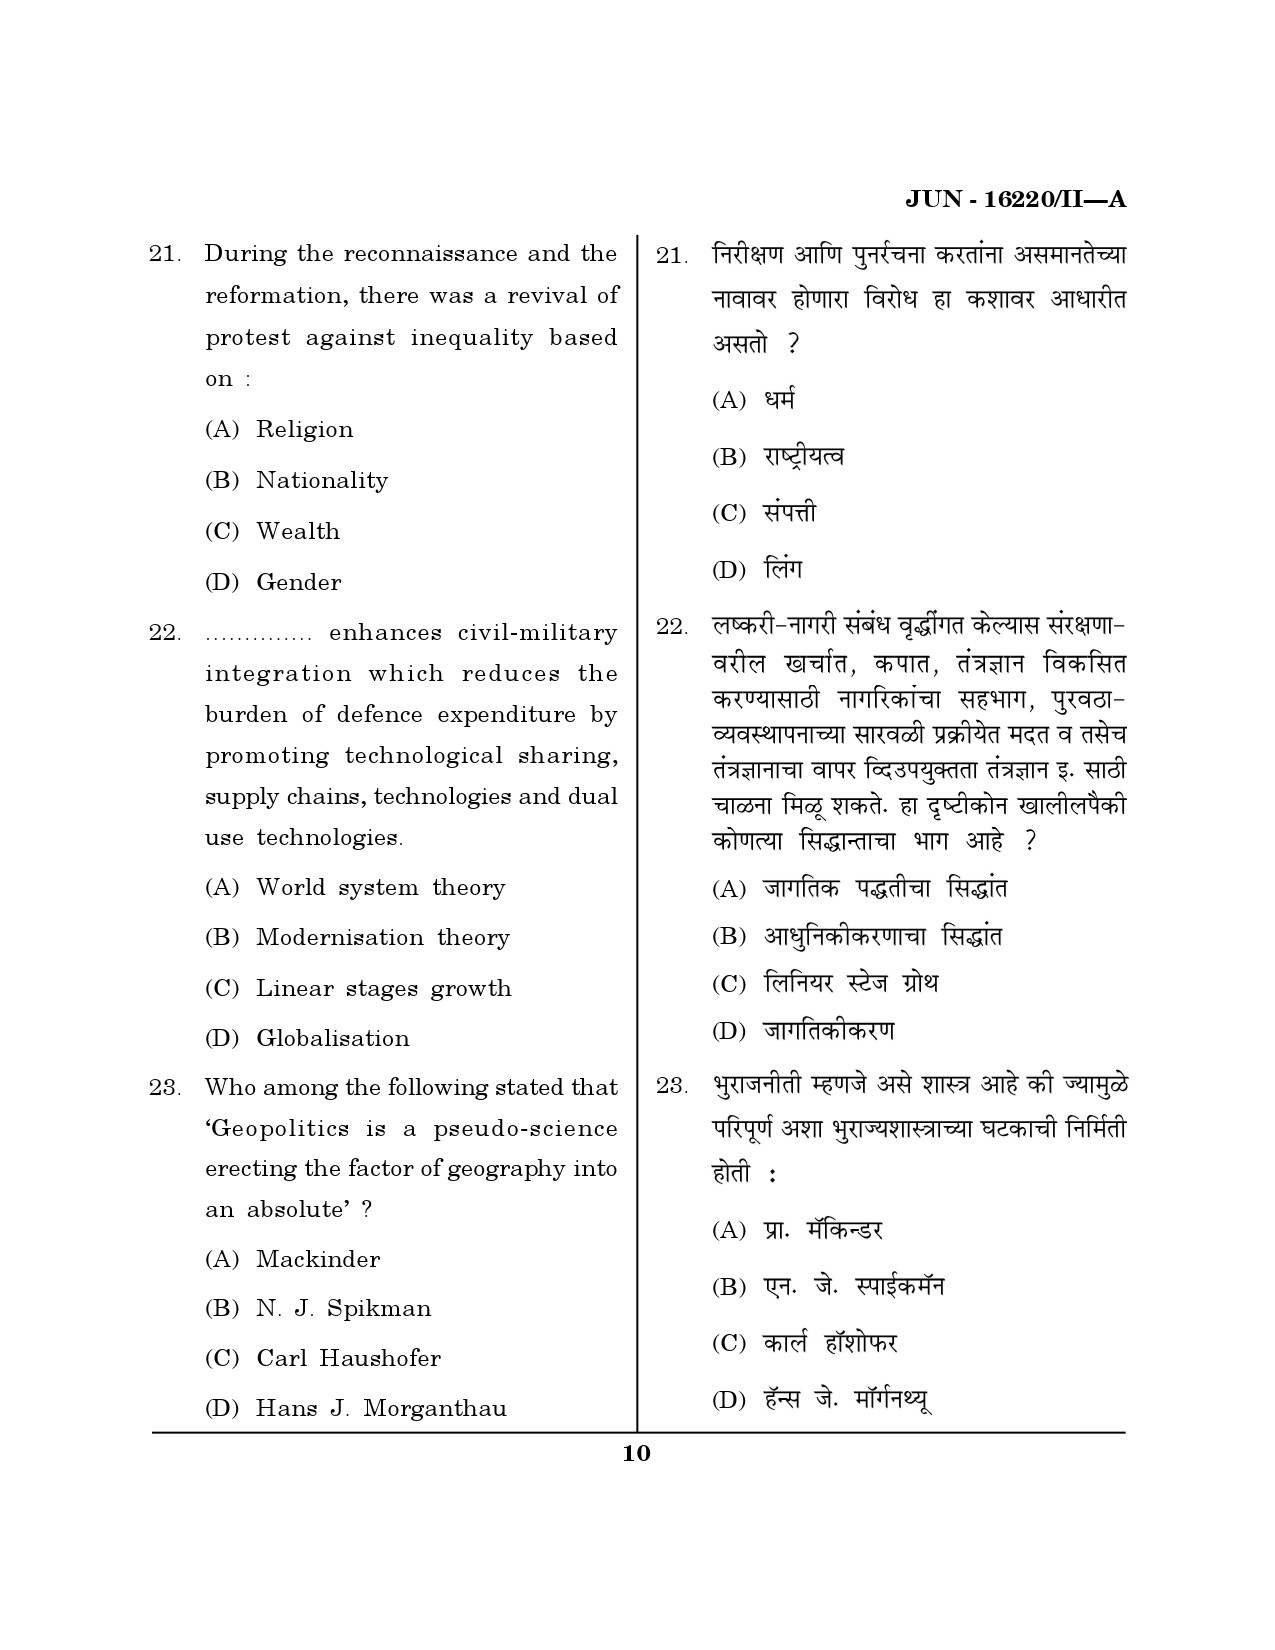 Maharashtra SET Defence and Strategic Studies Question Paper II June 2020 9